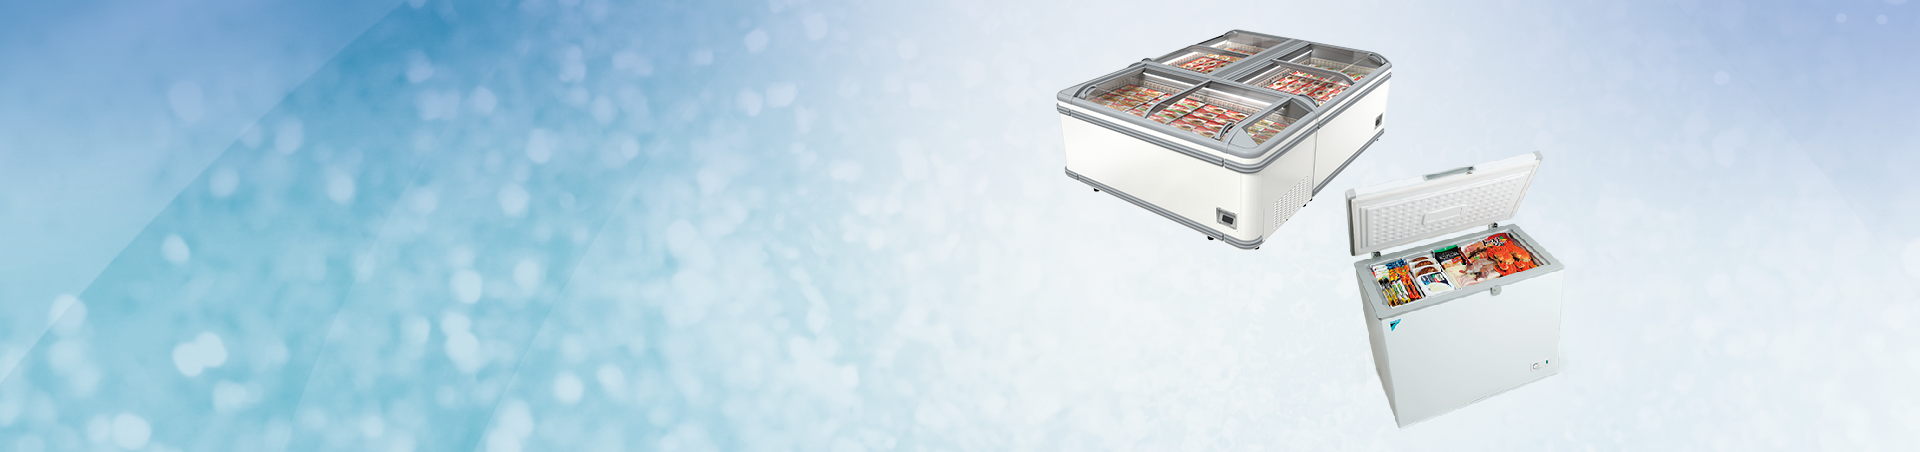 LTFMG145A ダイキン 冷凍プラグインショーケース MILANO スライド扉 片面タイプ 508リットル 5尺相当 冷蔵庫・冷凍庫